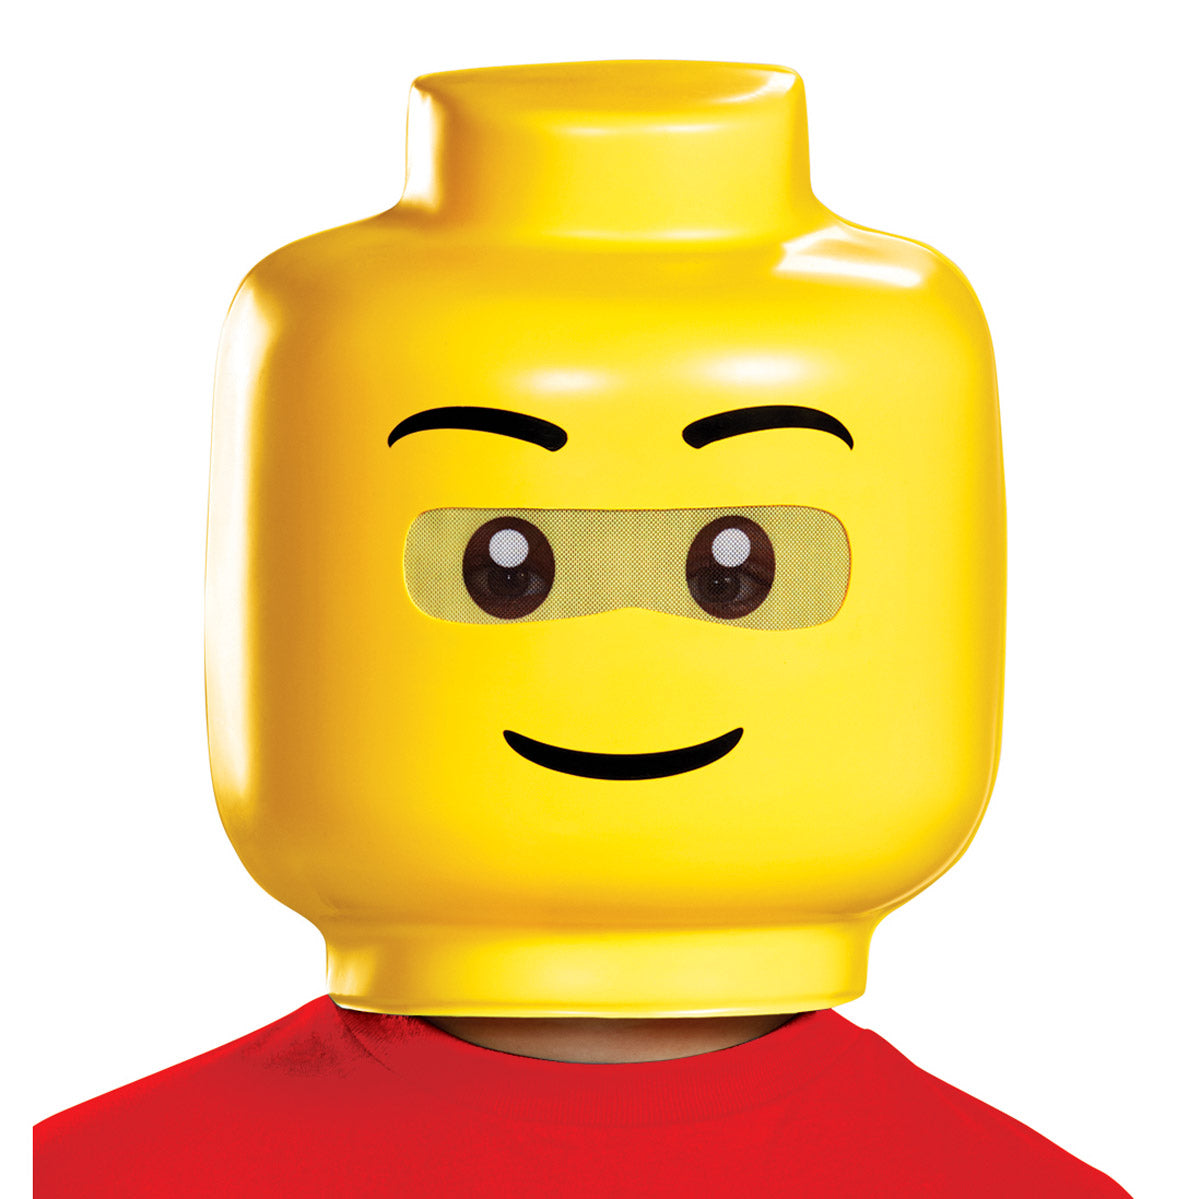 Lego Guy Mask - Child Disguise 66197